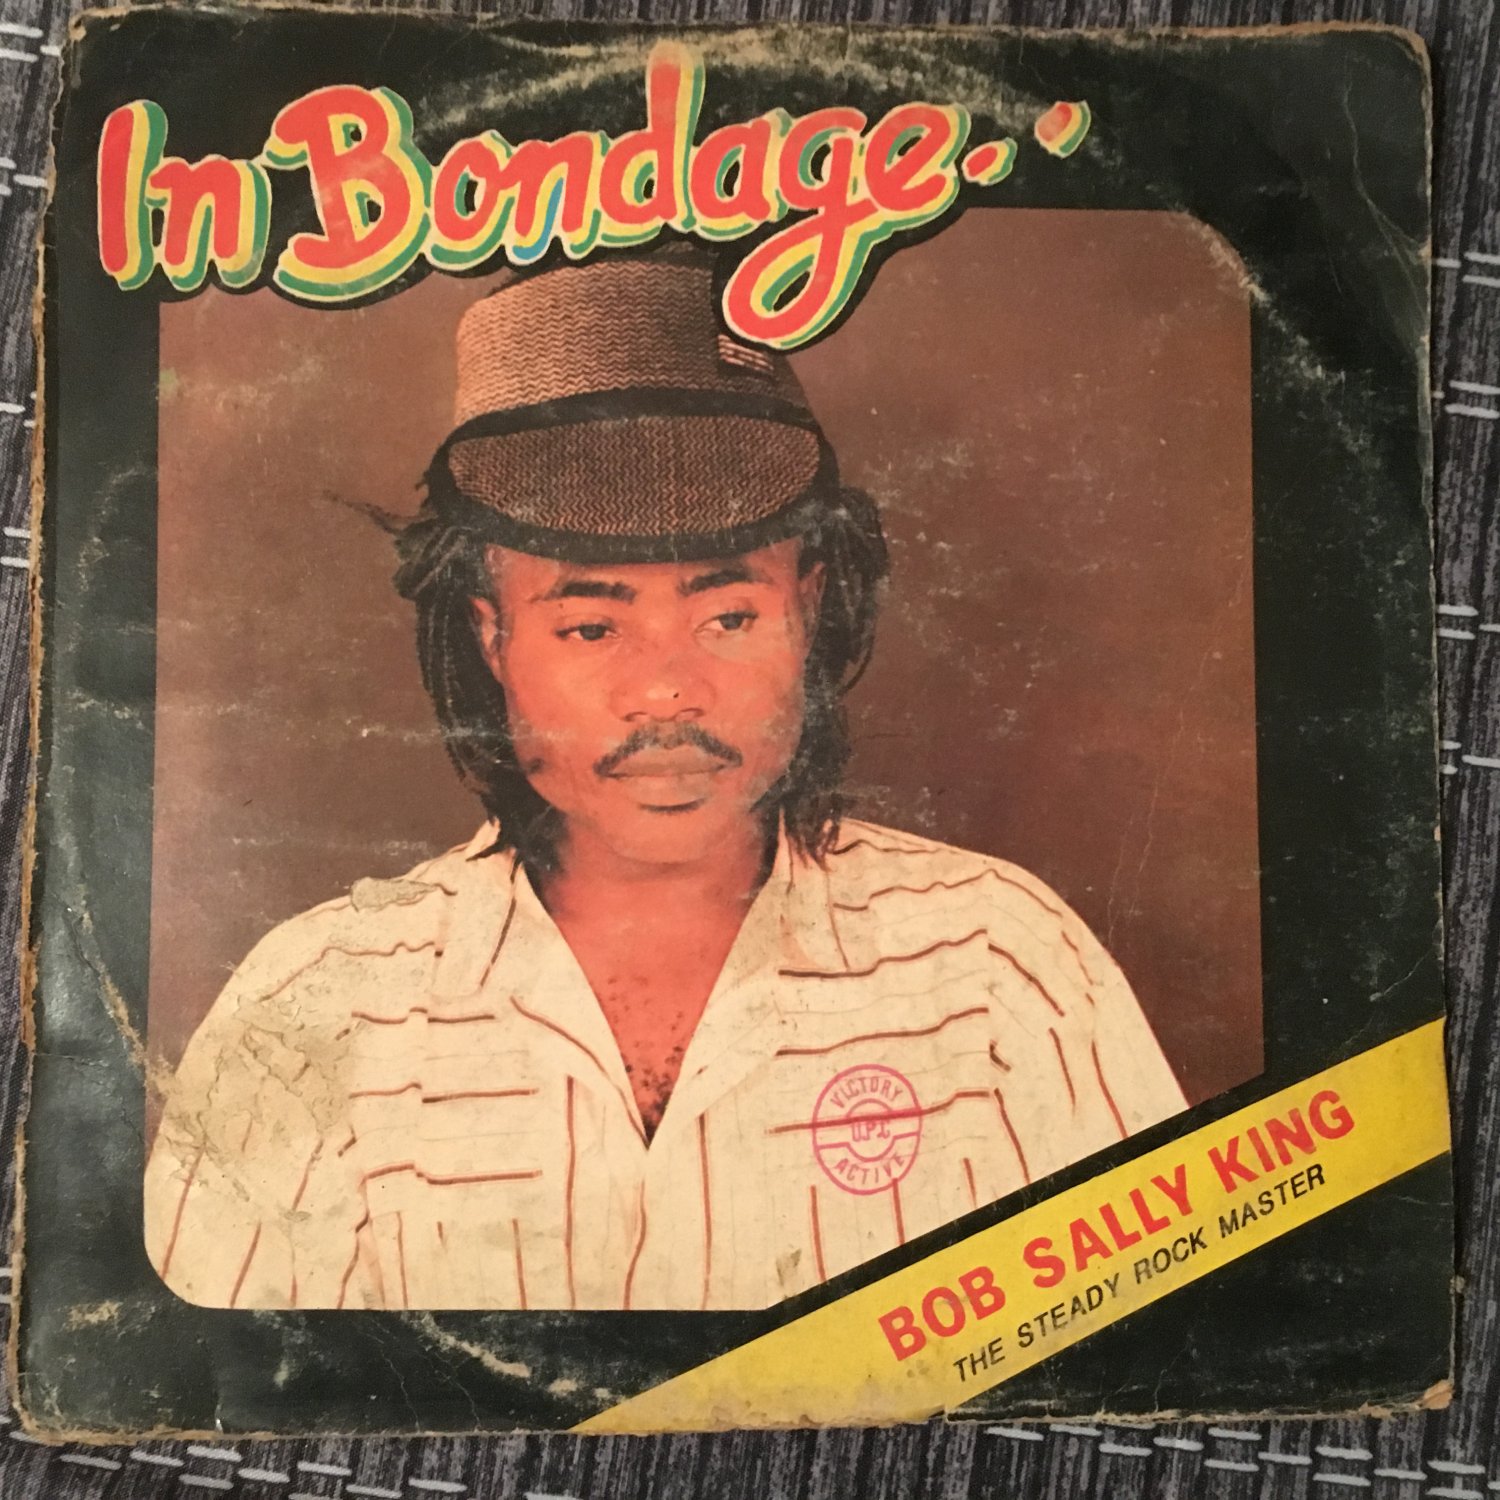 BOB SALLY KING LP in bondage NIGERIA REGGAE DIGITAL mp3 LISTEN